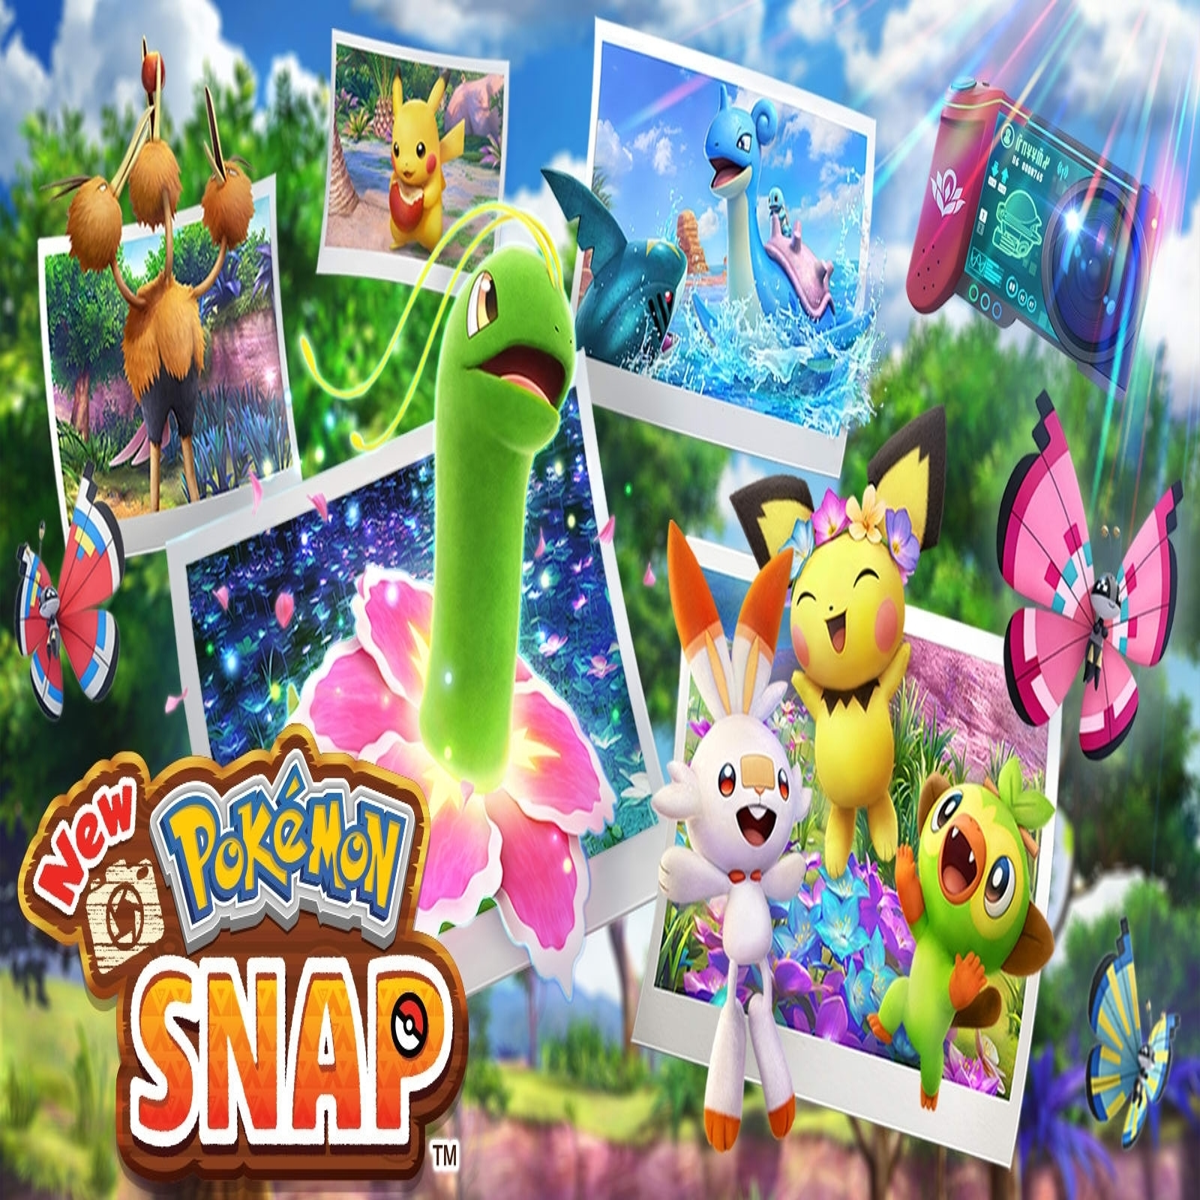 New Pokémon Snap - Ho-Oh's location, A Slice of the Rainbow